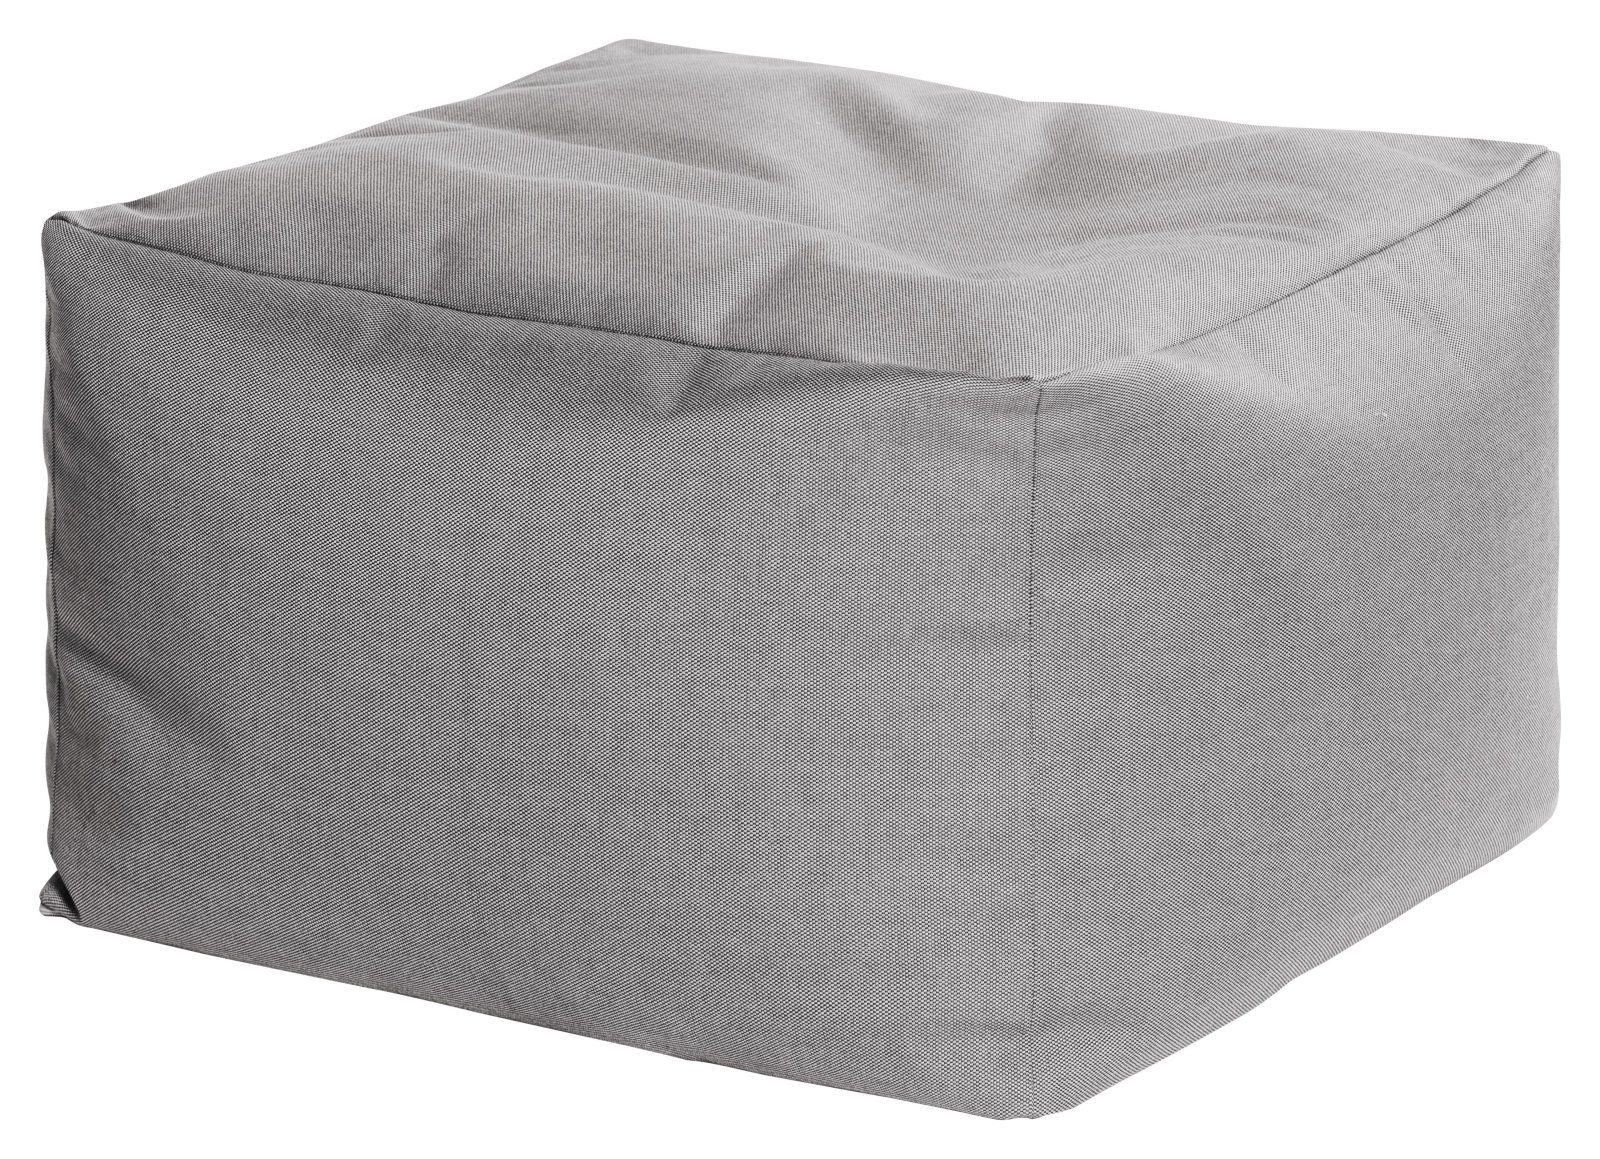 SITTING Hocker Sitzsack POINT Sitzsack 80x80cm Grau, Magma Loft OUTSIDE grau (Outdoor/Indoor)